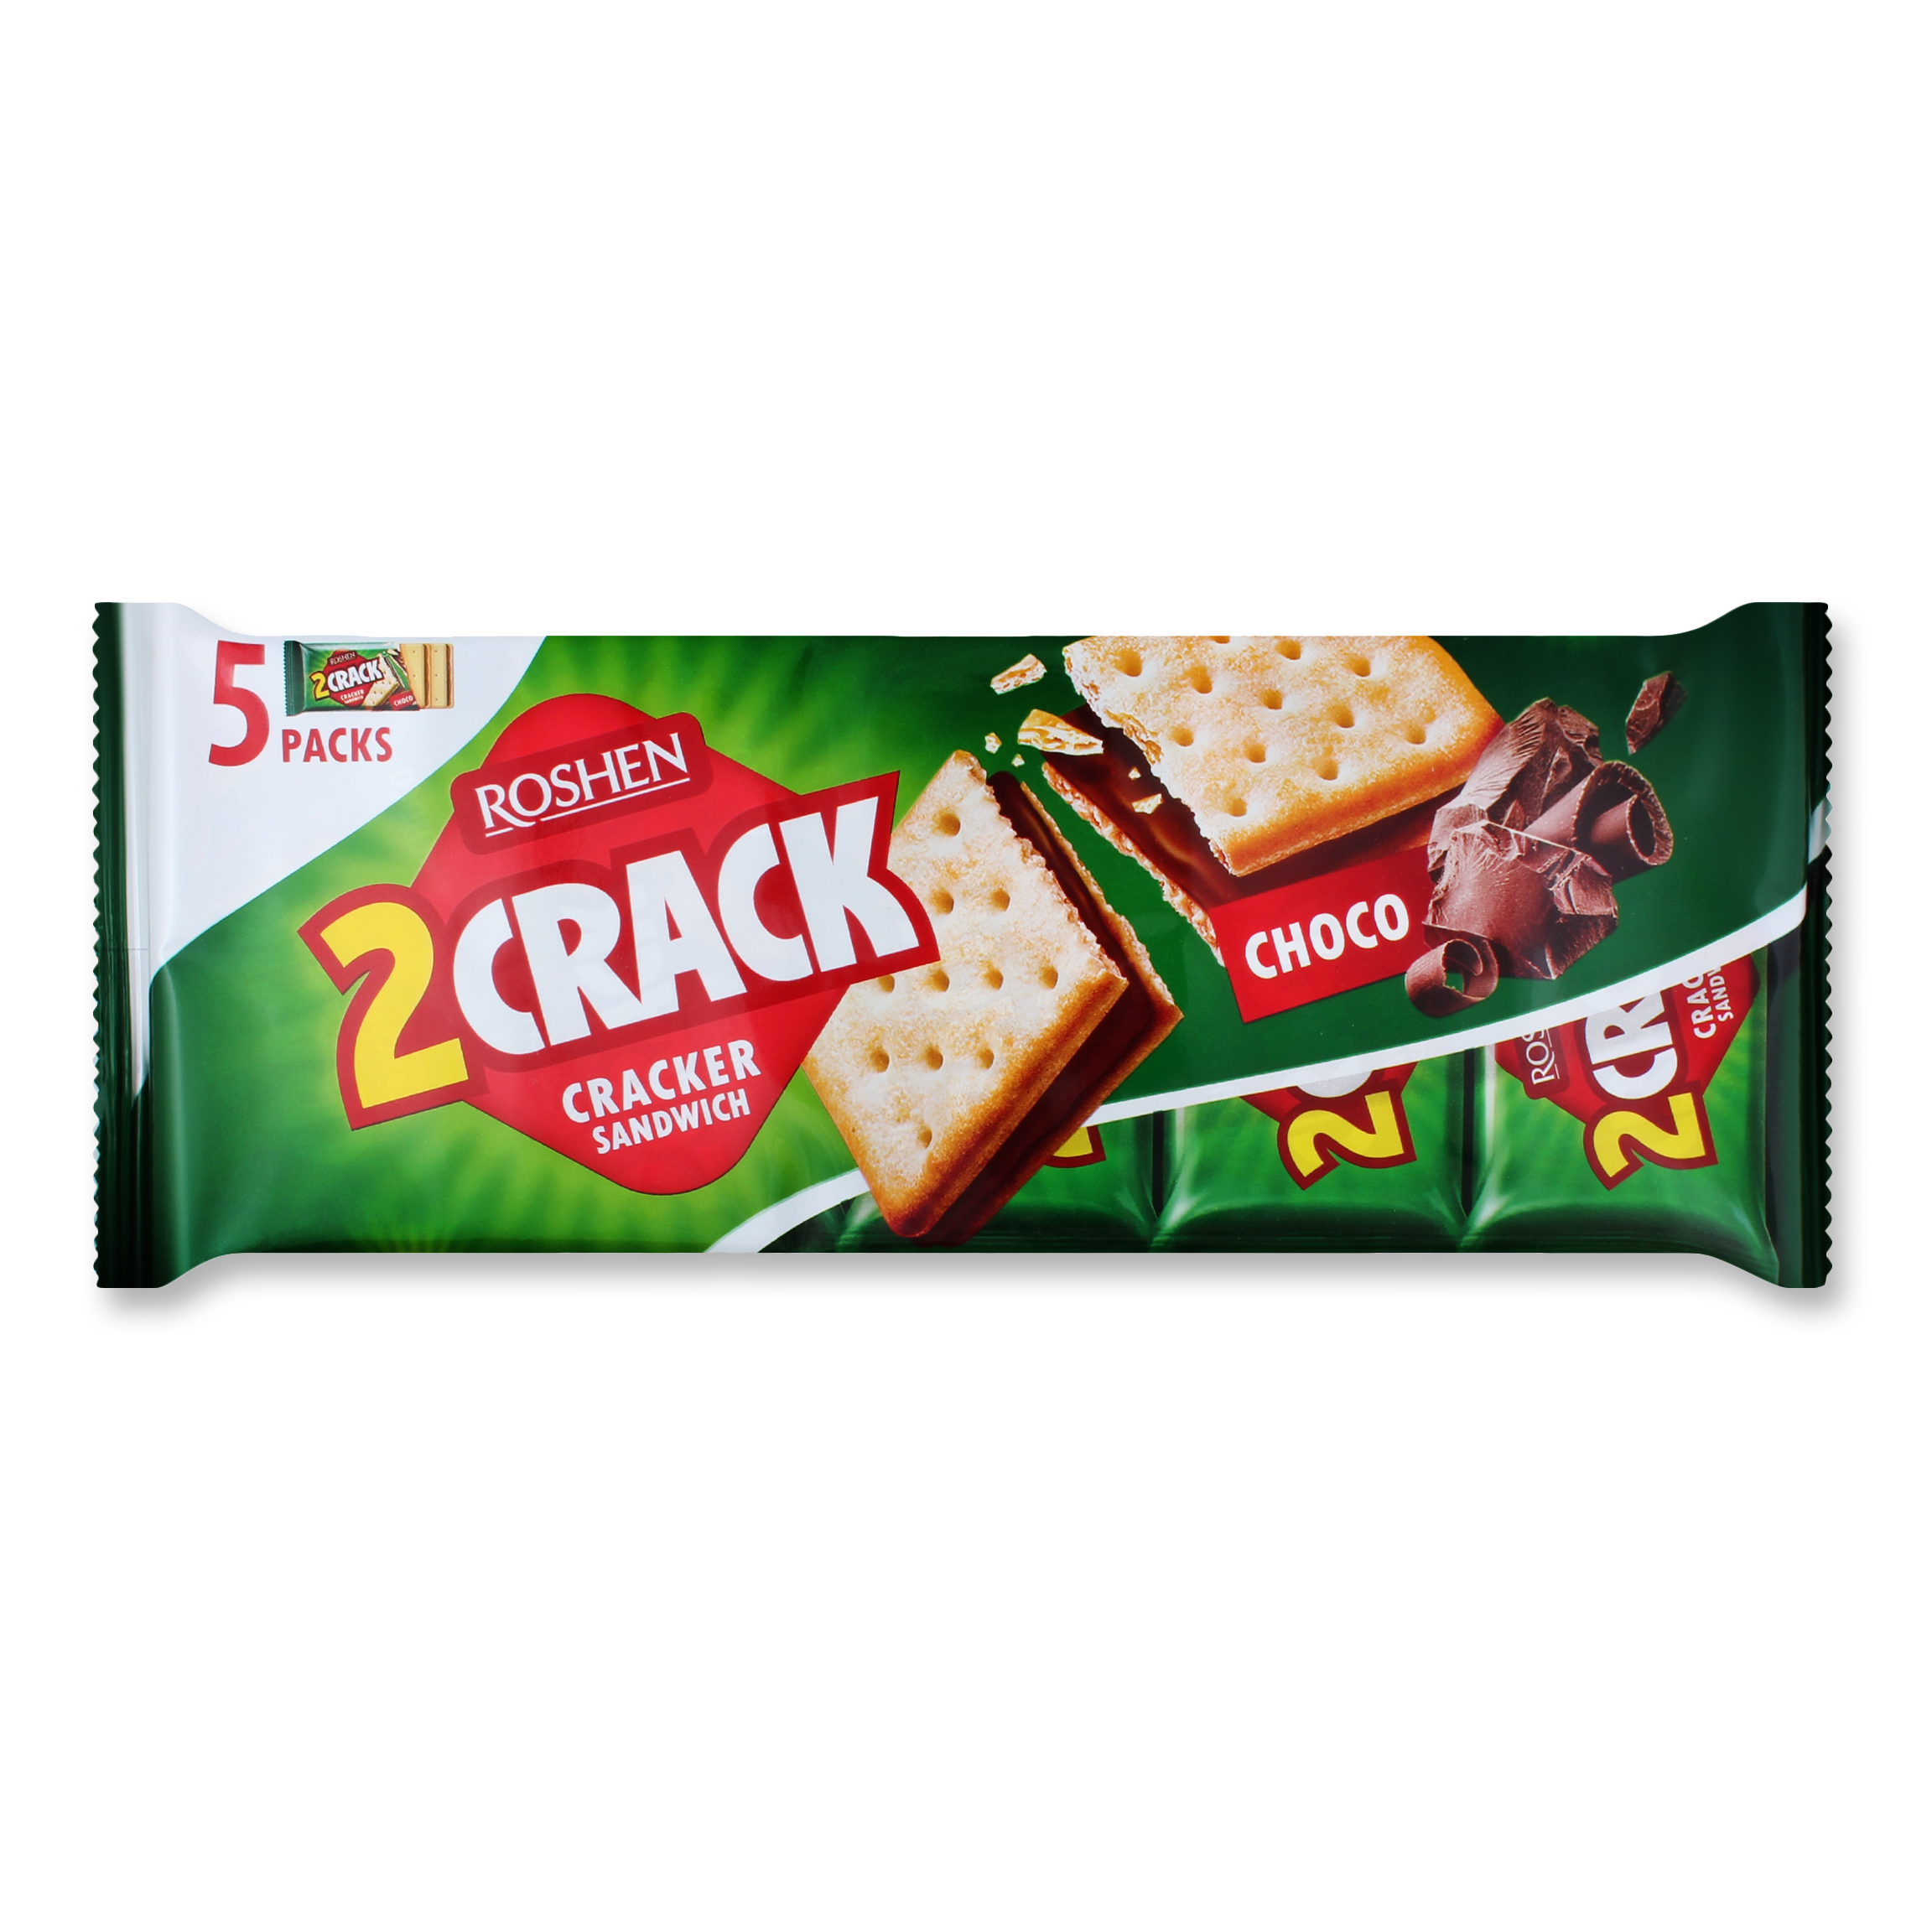 Roshen 2 CRACK cracker with chocolate filling 235 g 2